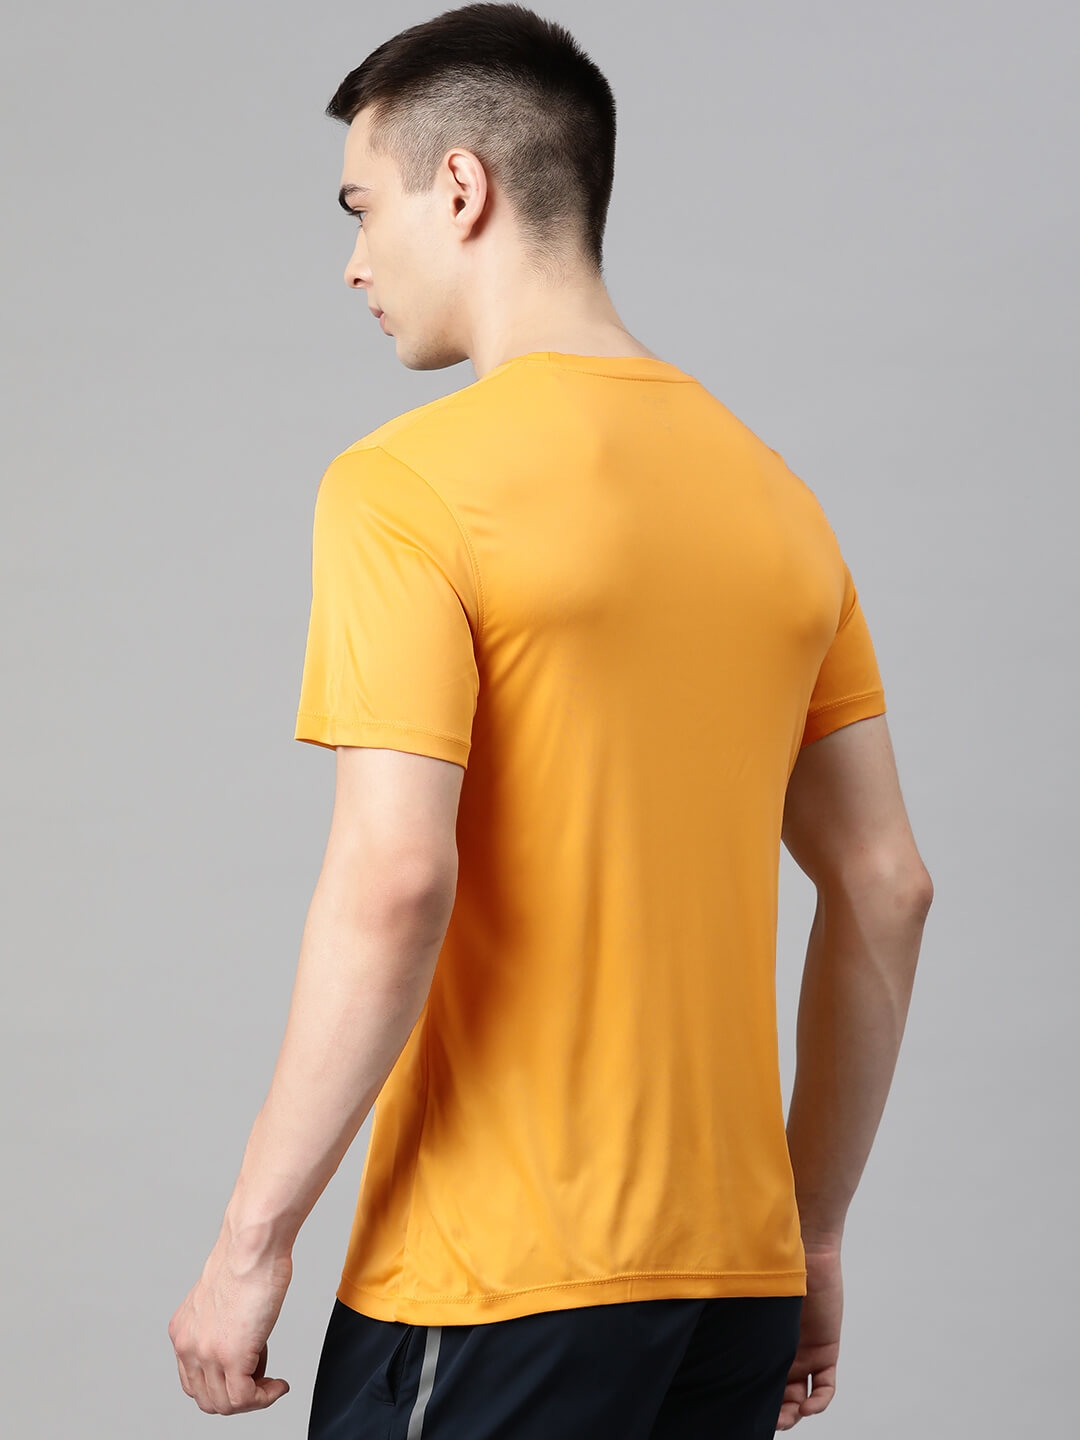 Alcis Men Anti Static Reflective Slim Fit Sports T-shirt